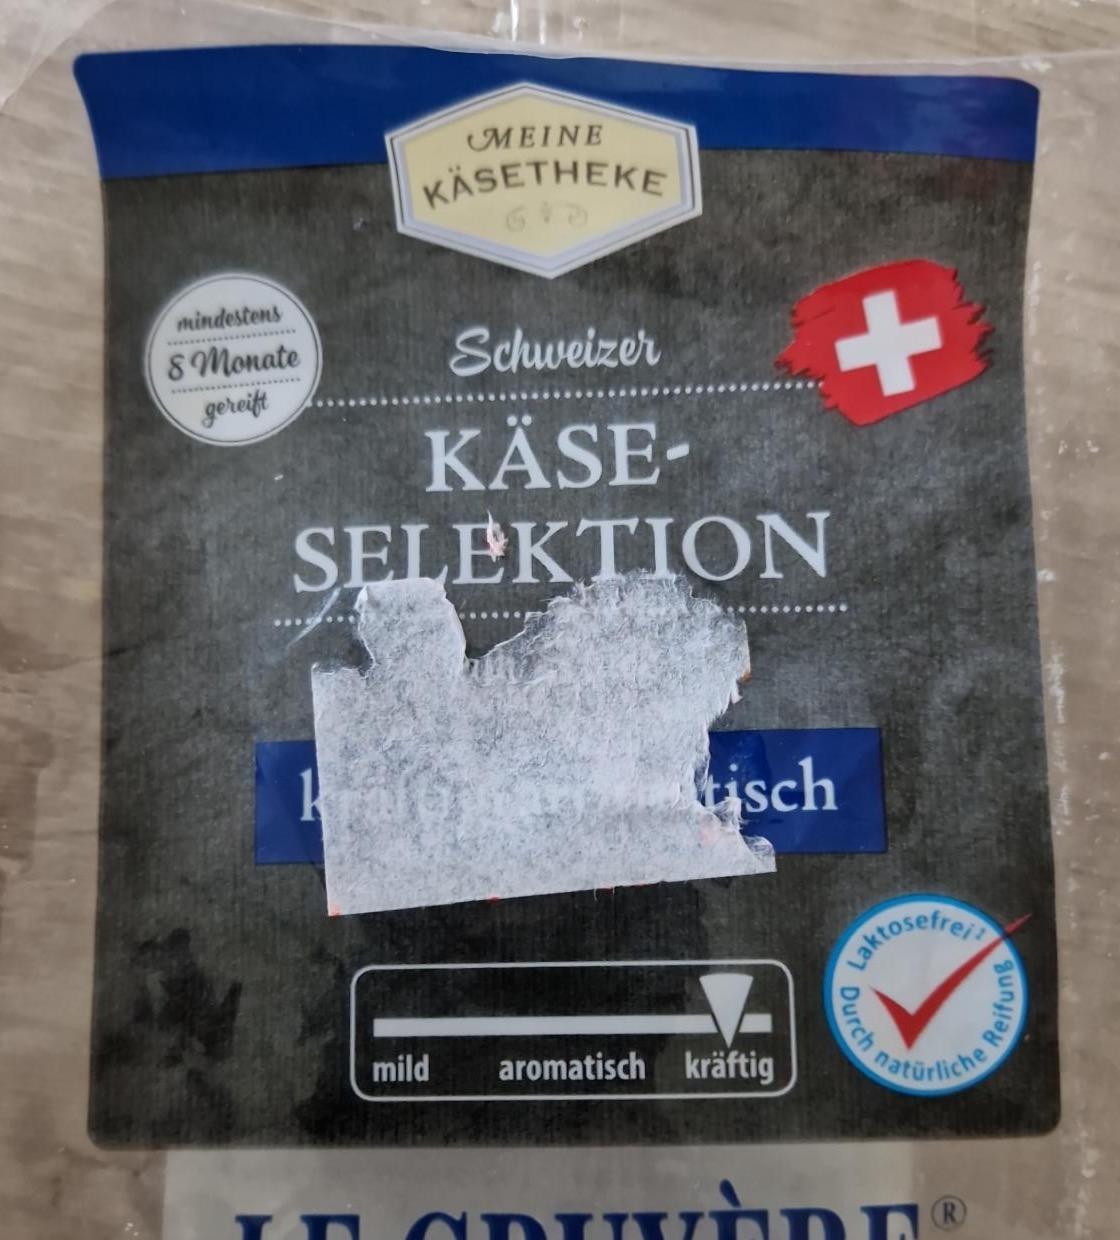 Képek - Schweizer käse-selektion Meine Käsetheke